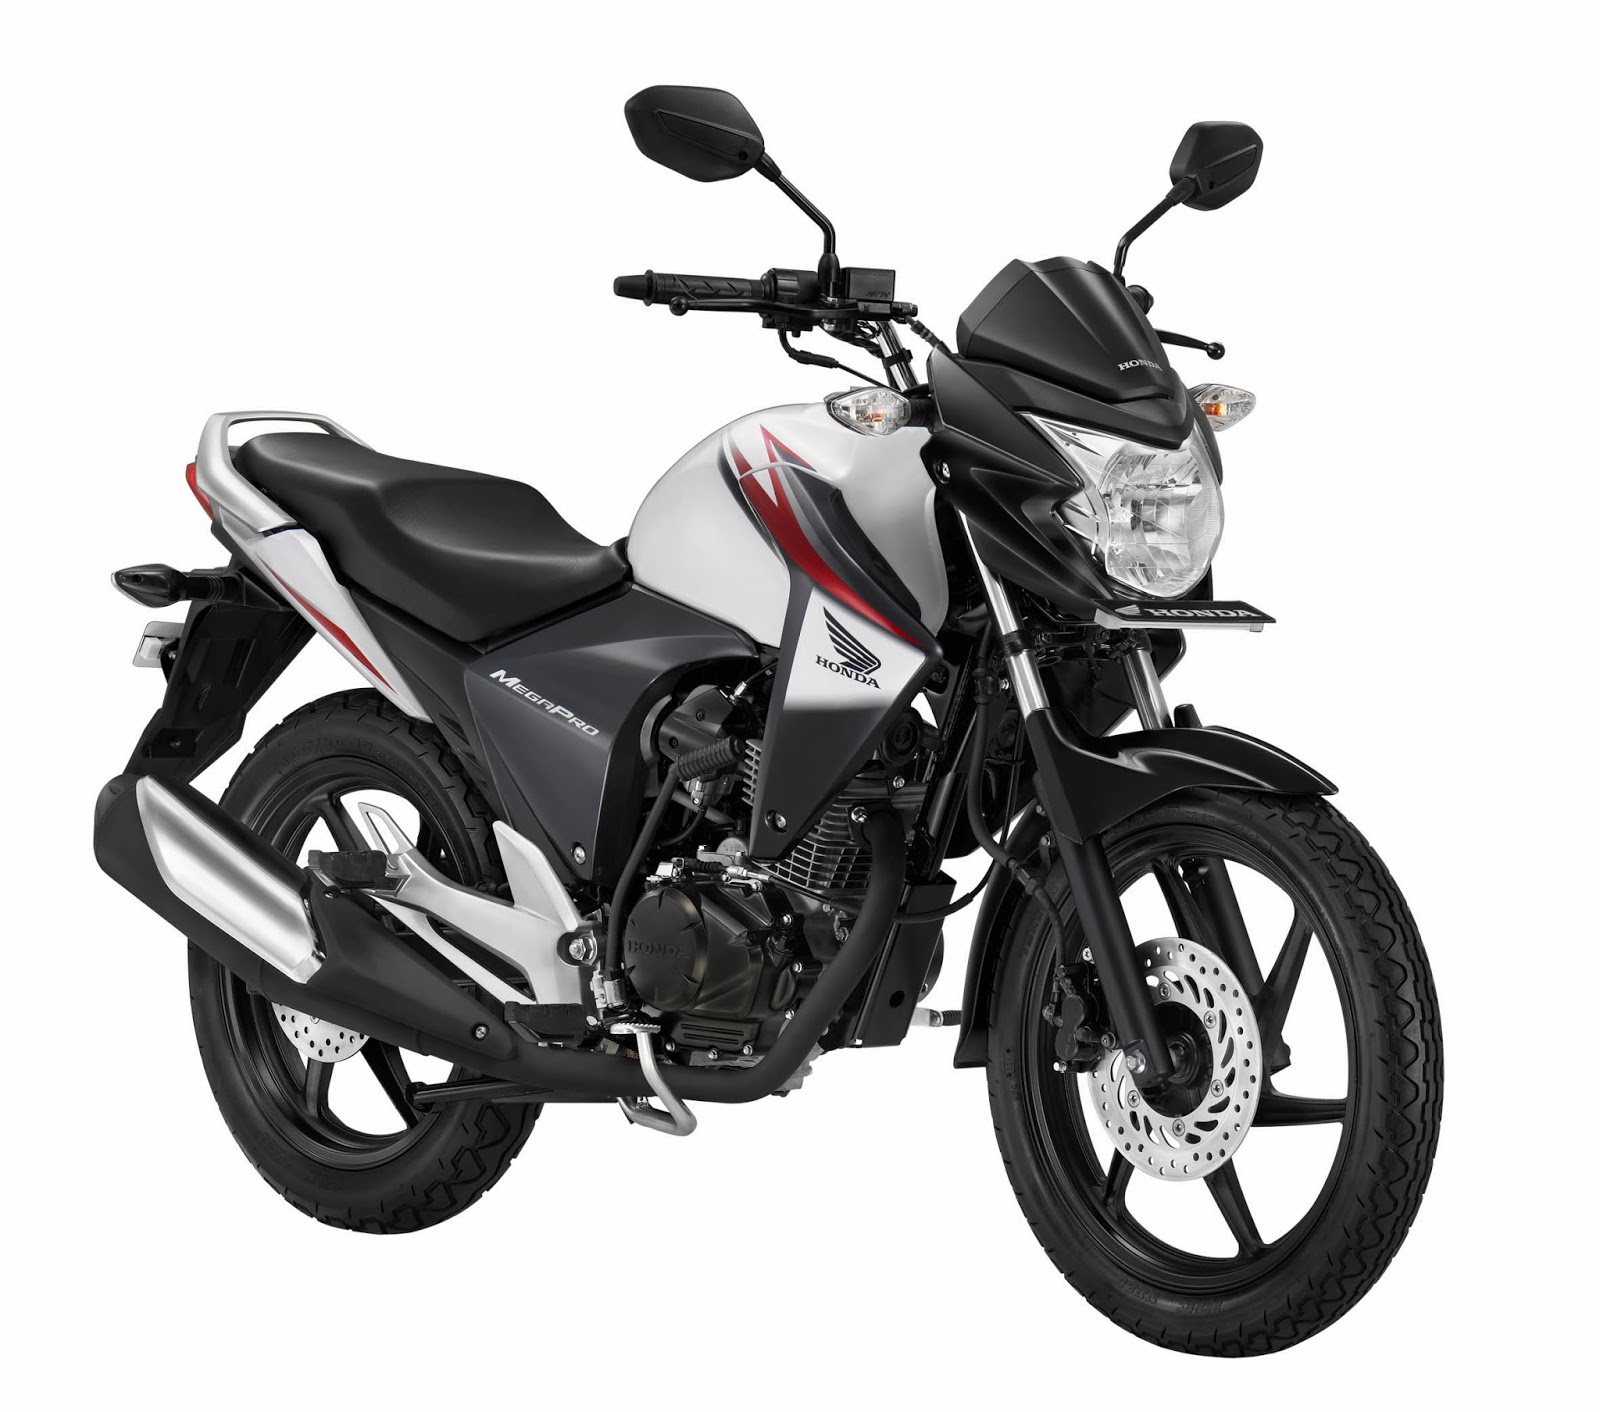 harga Motor News ban  new Spesifikasi MegaPro  Honda motor Otomotif  Dan Harga megapro tubeless 2014 New